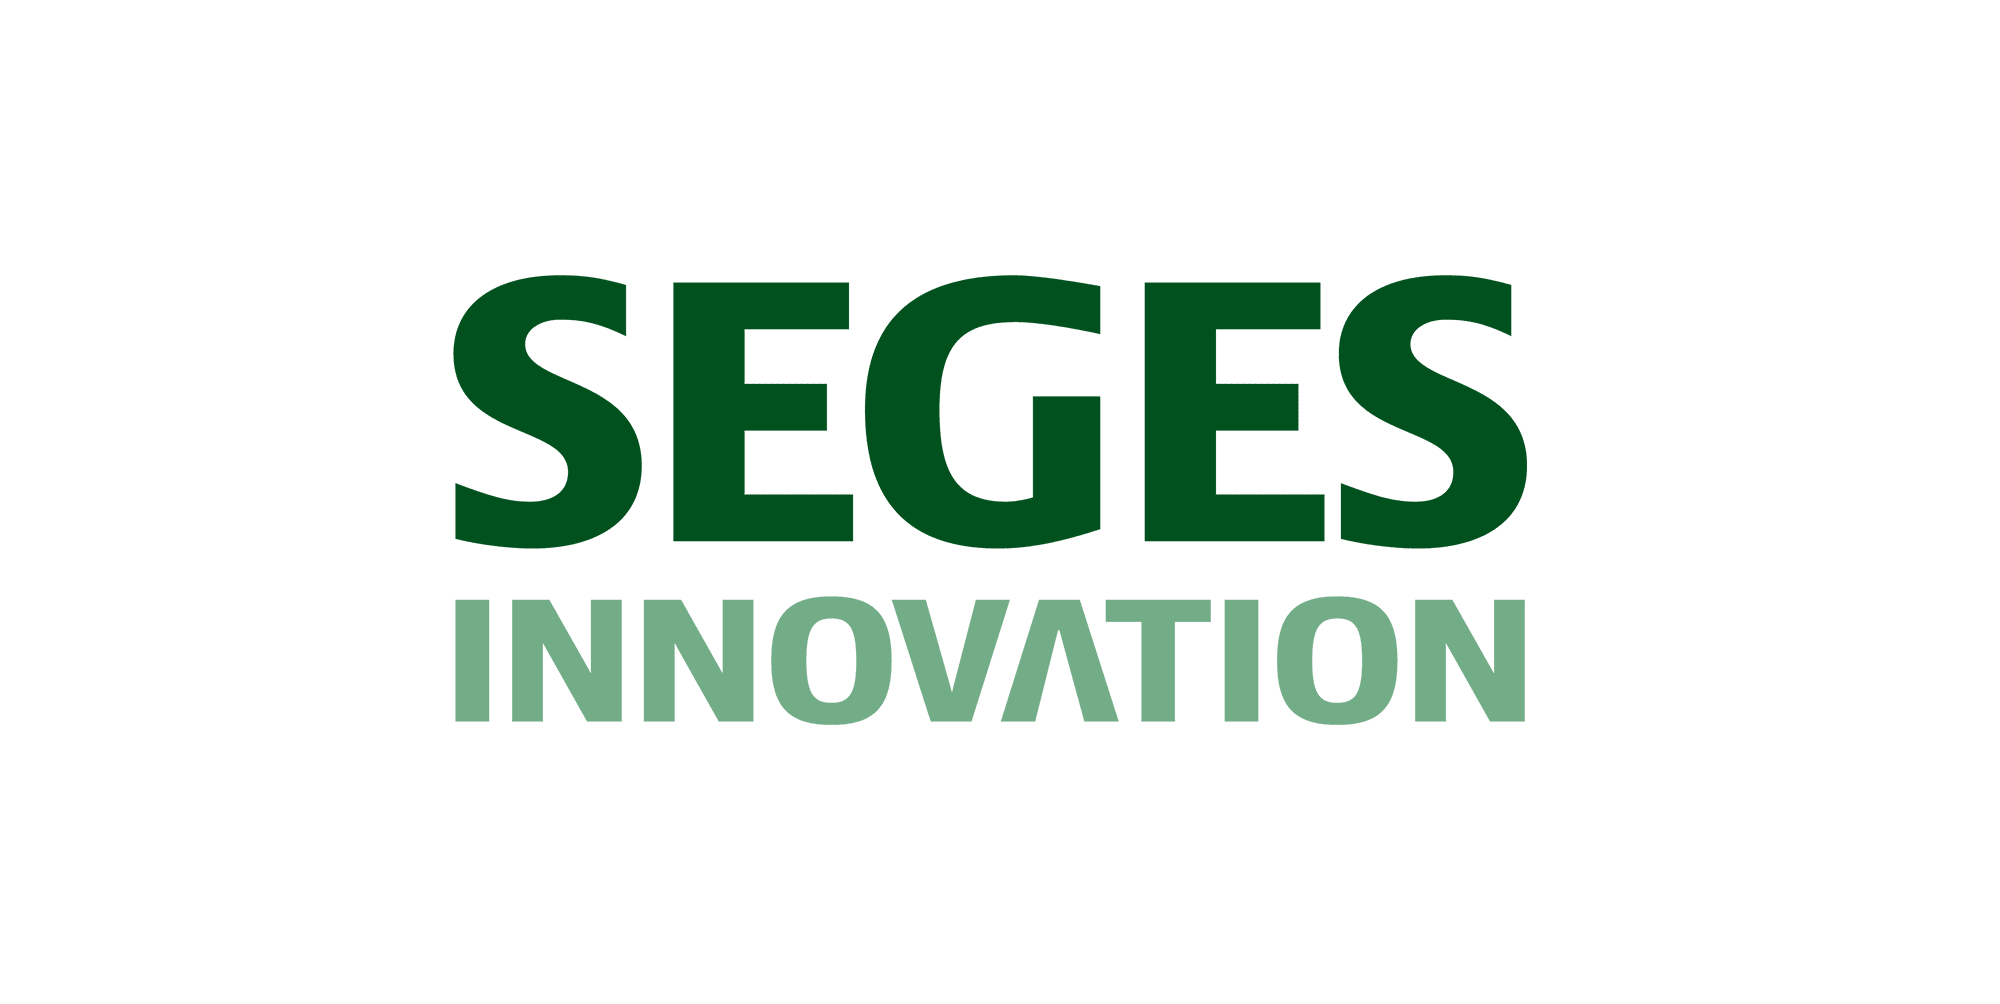 SEGES Innovation partner logo